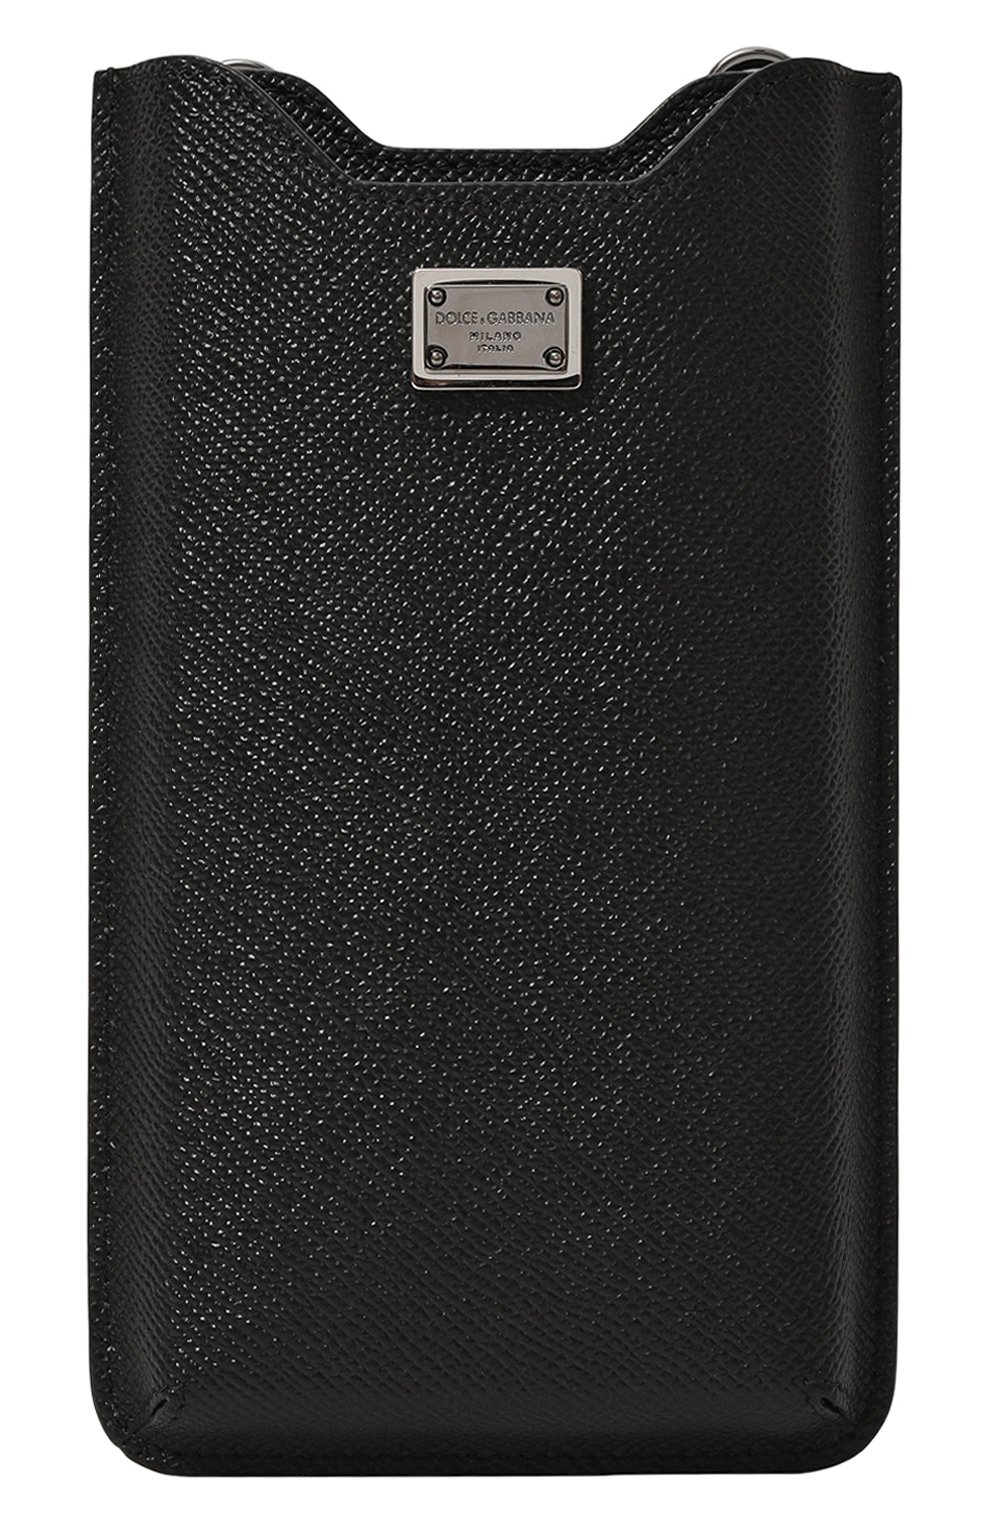 Кожаный футляр для iphone DOLCE & GABBANA черного цв ета, арт. BP3224/AG219 | Фото 1 (Региональные ограничения белый список (Axapta Mercury): Не проставлено; Материал: Натуральная кожа; Нос: Не проставлено)